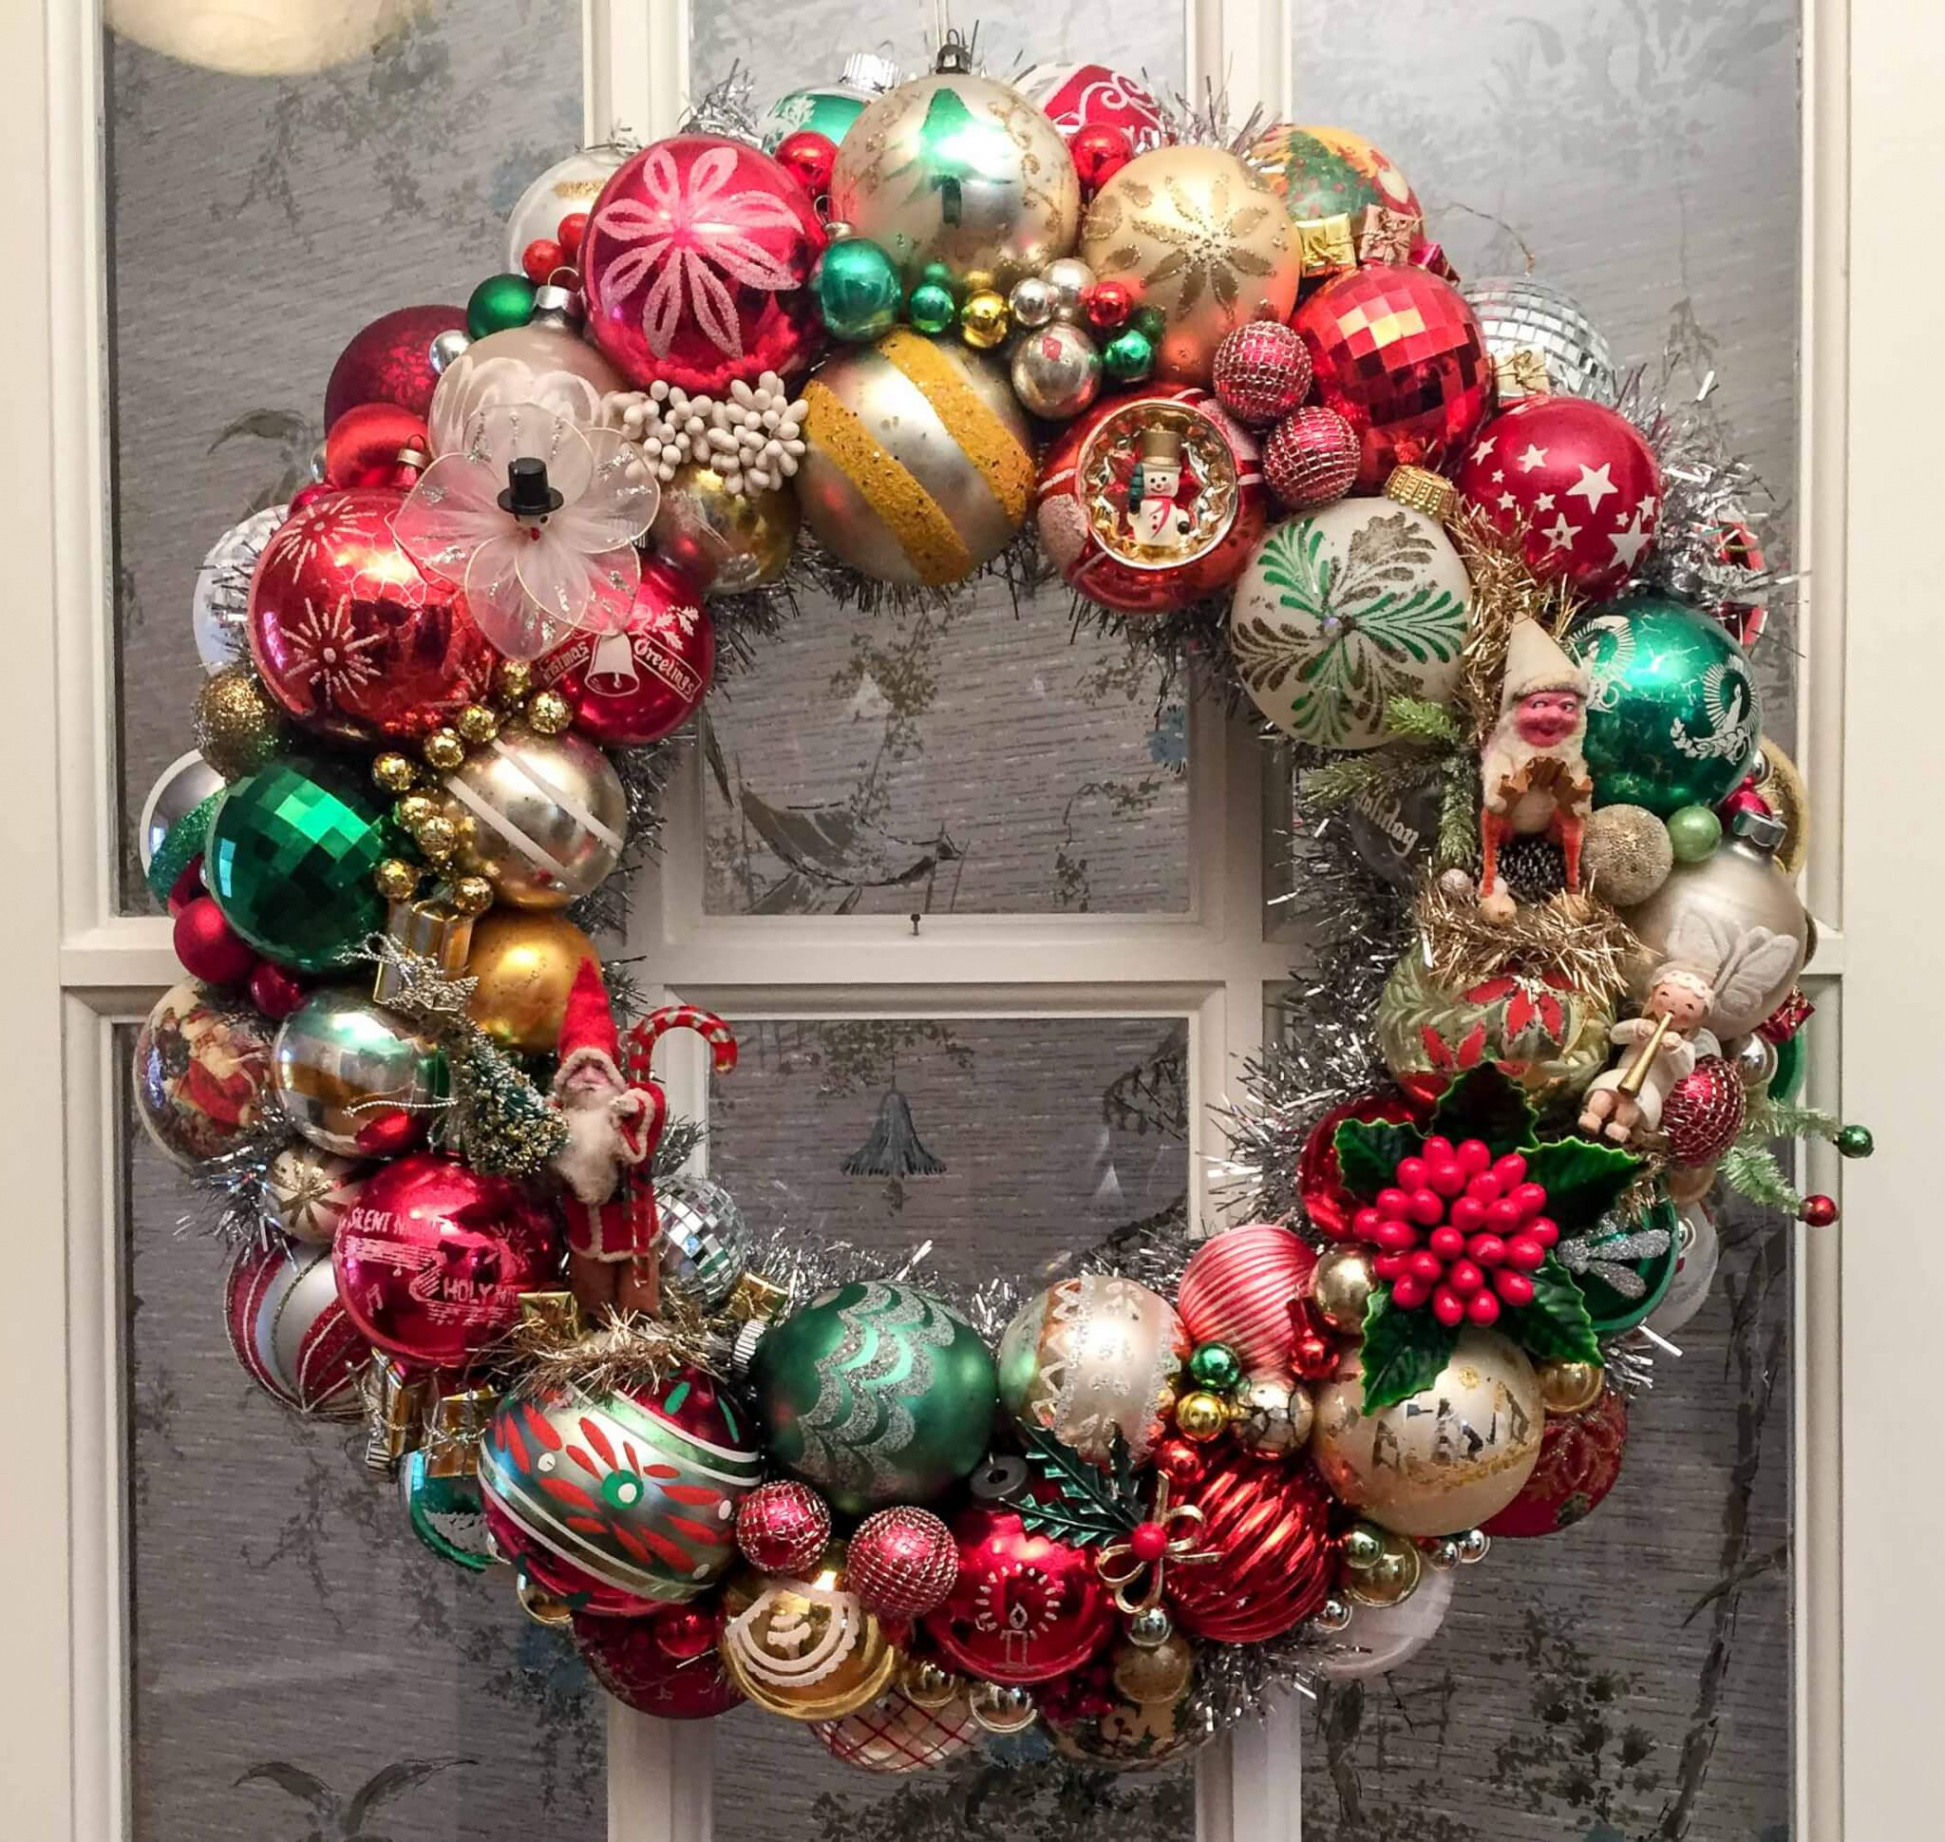 Original Christmas ornament wreath tutorial - Since